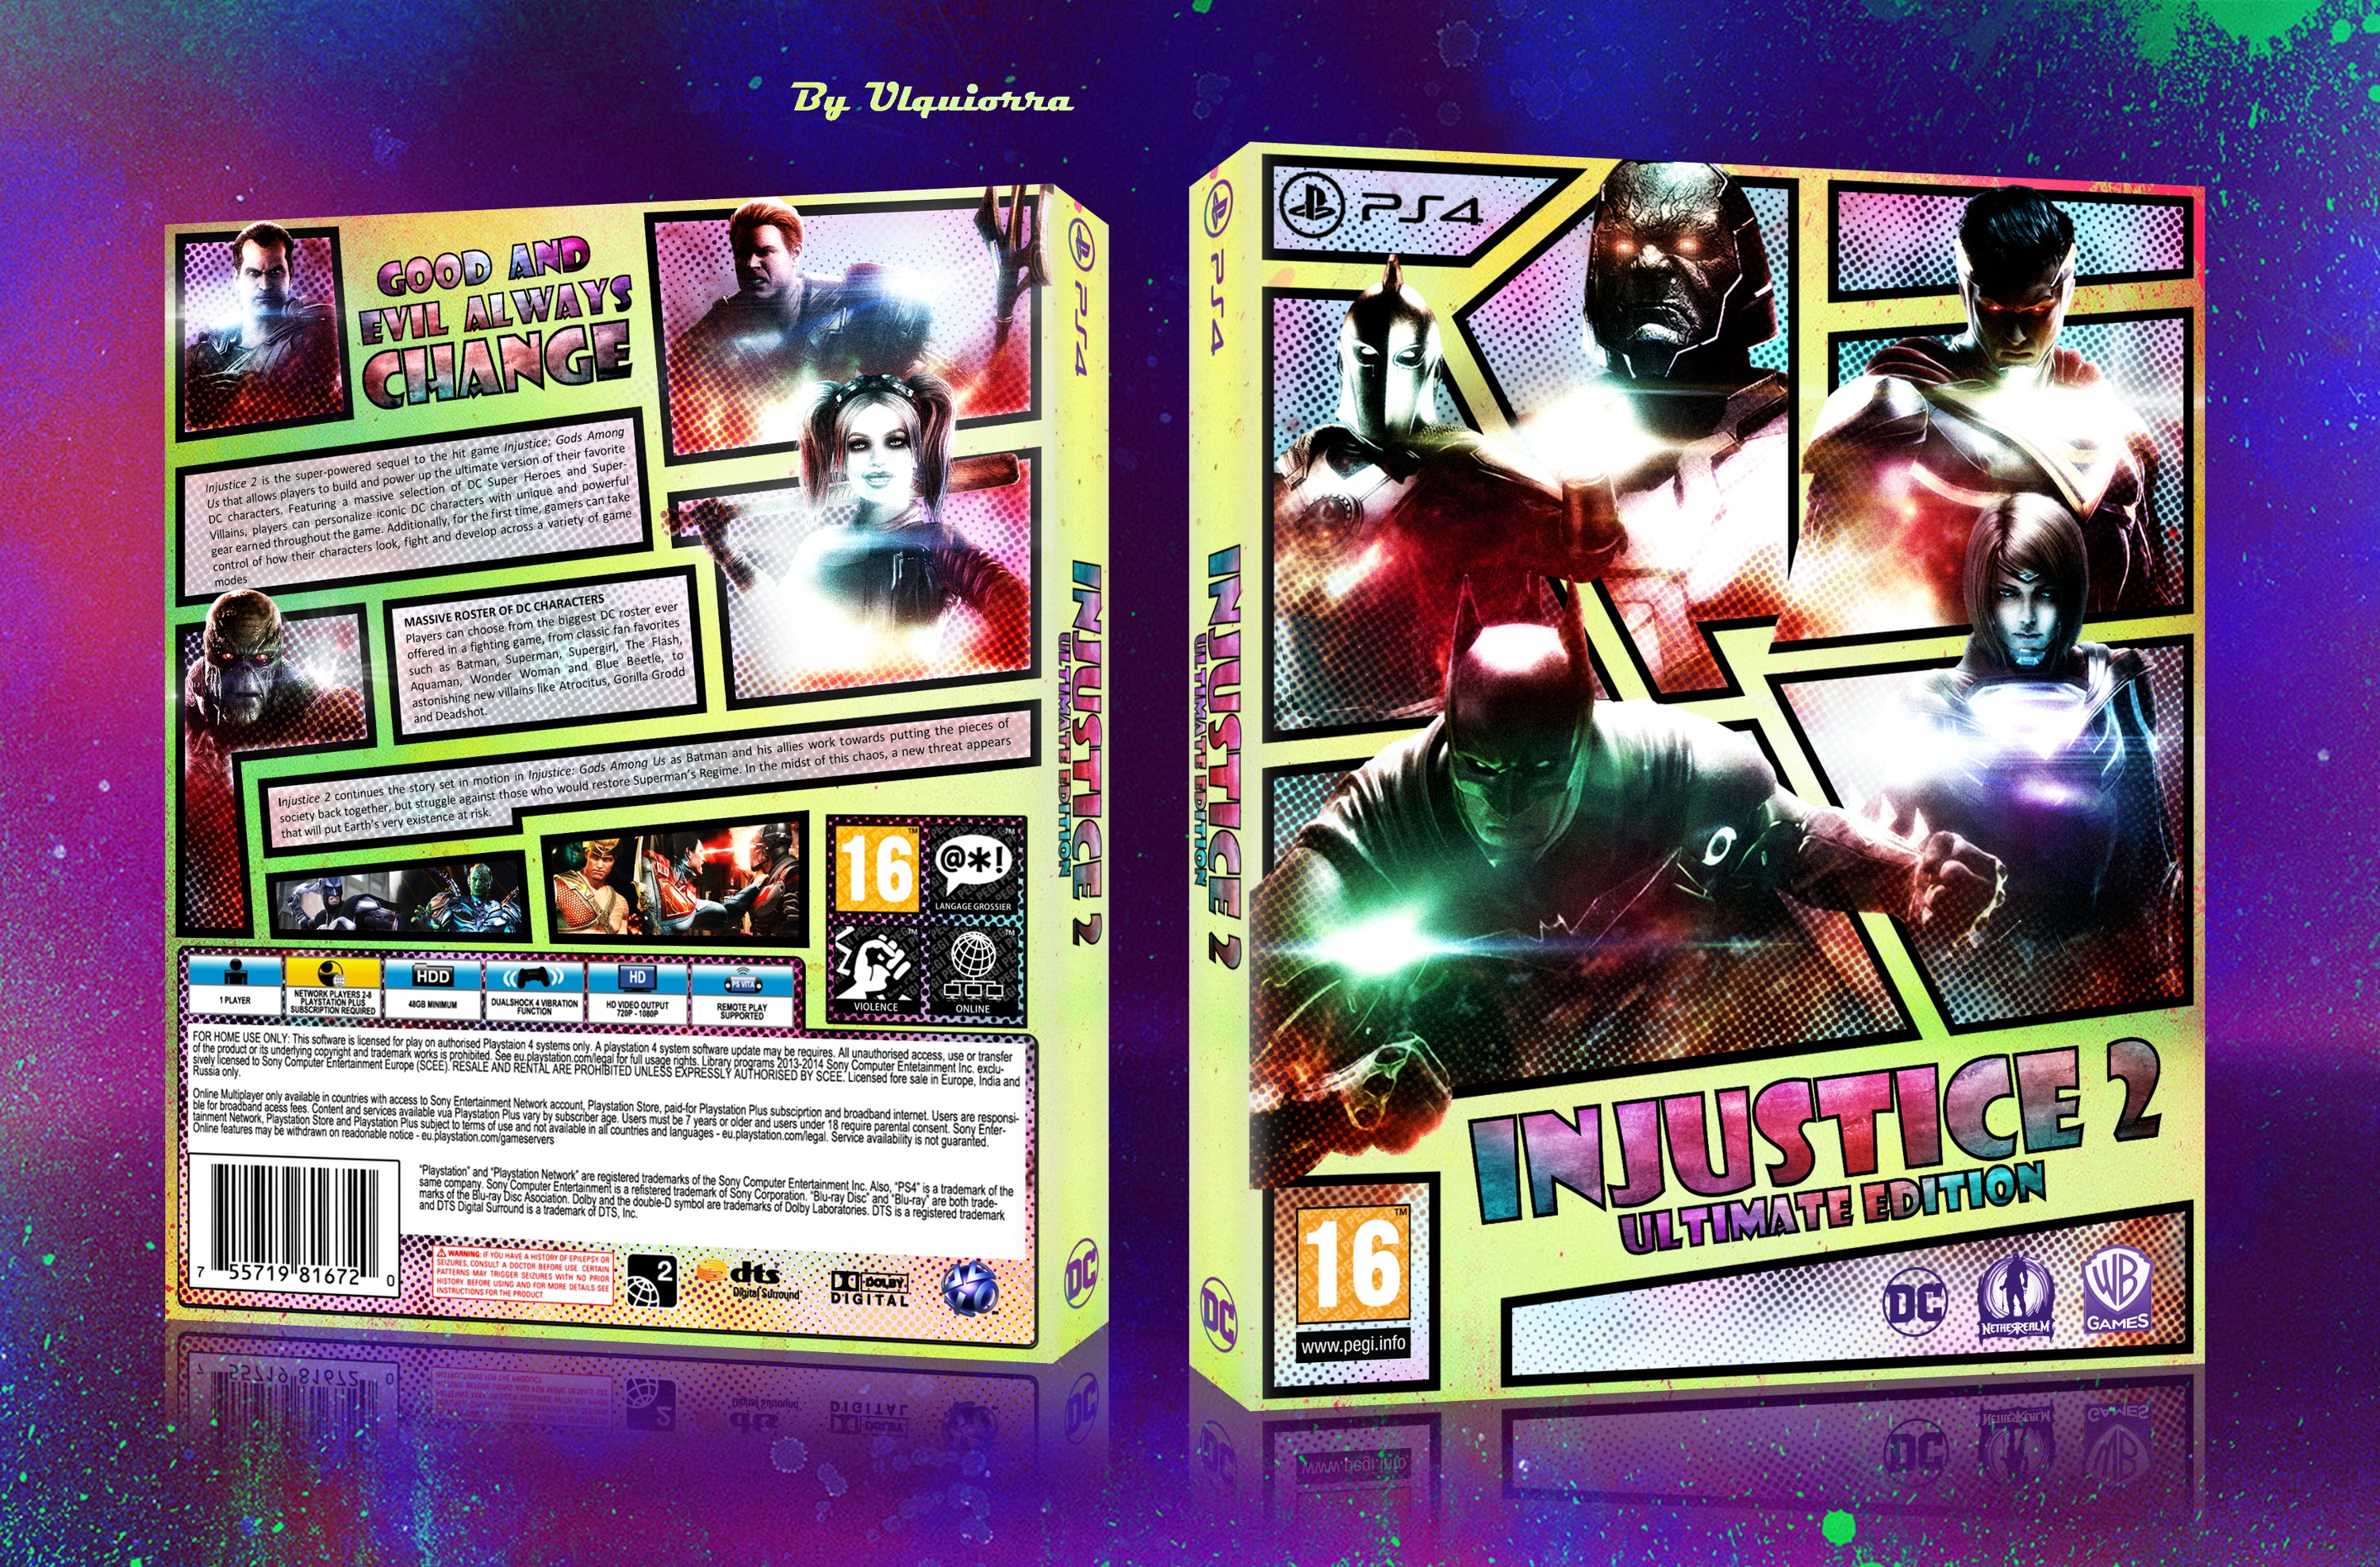 Injustice 2 - Ultimate Edition box cover